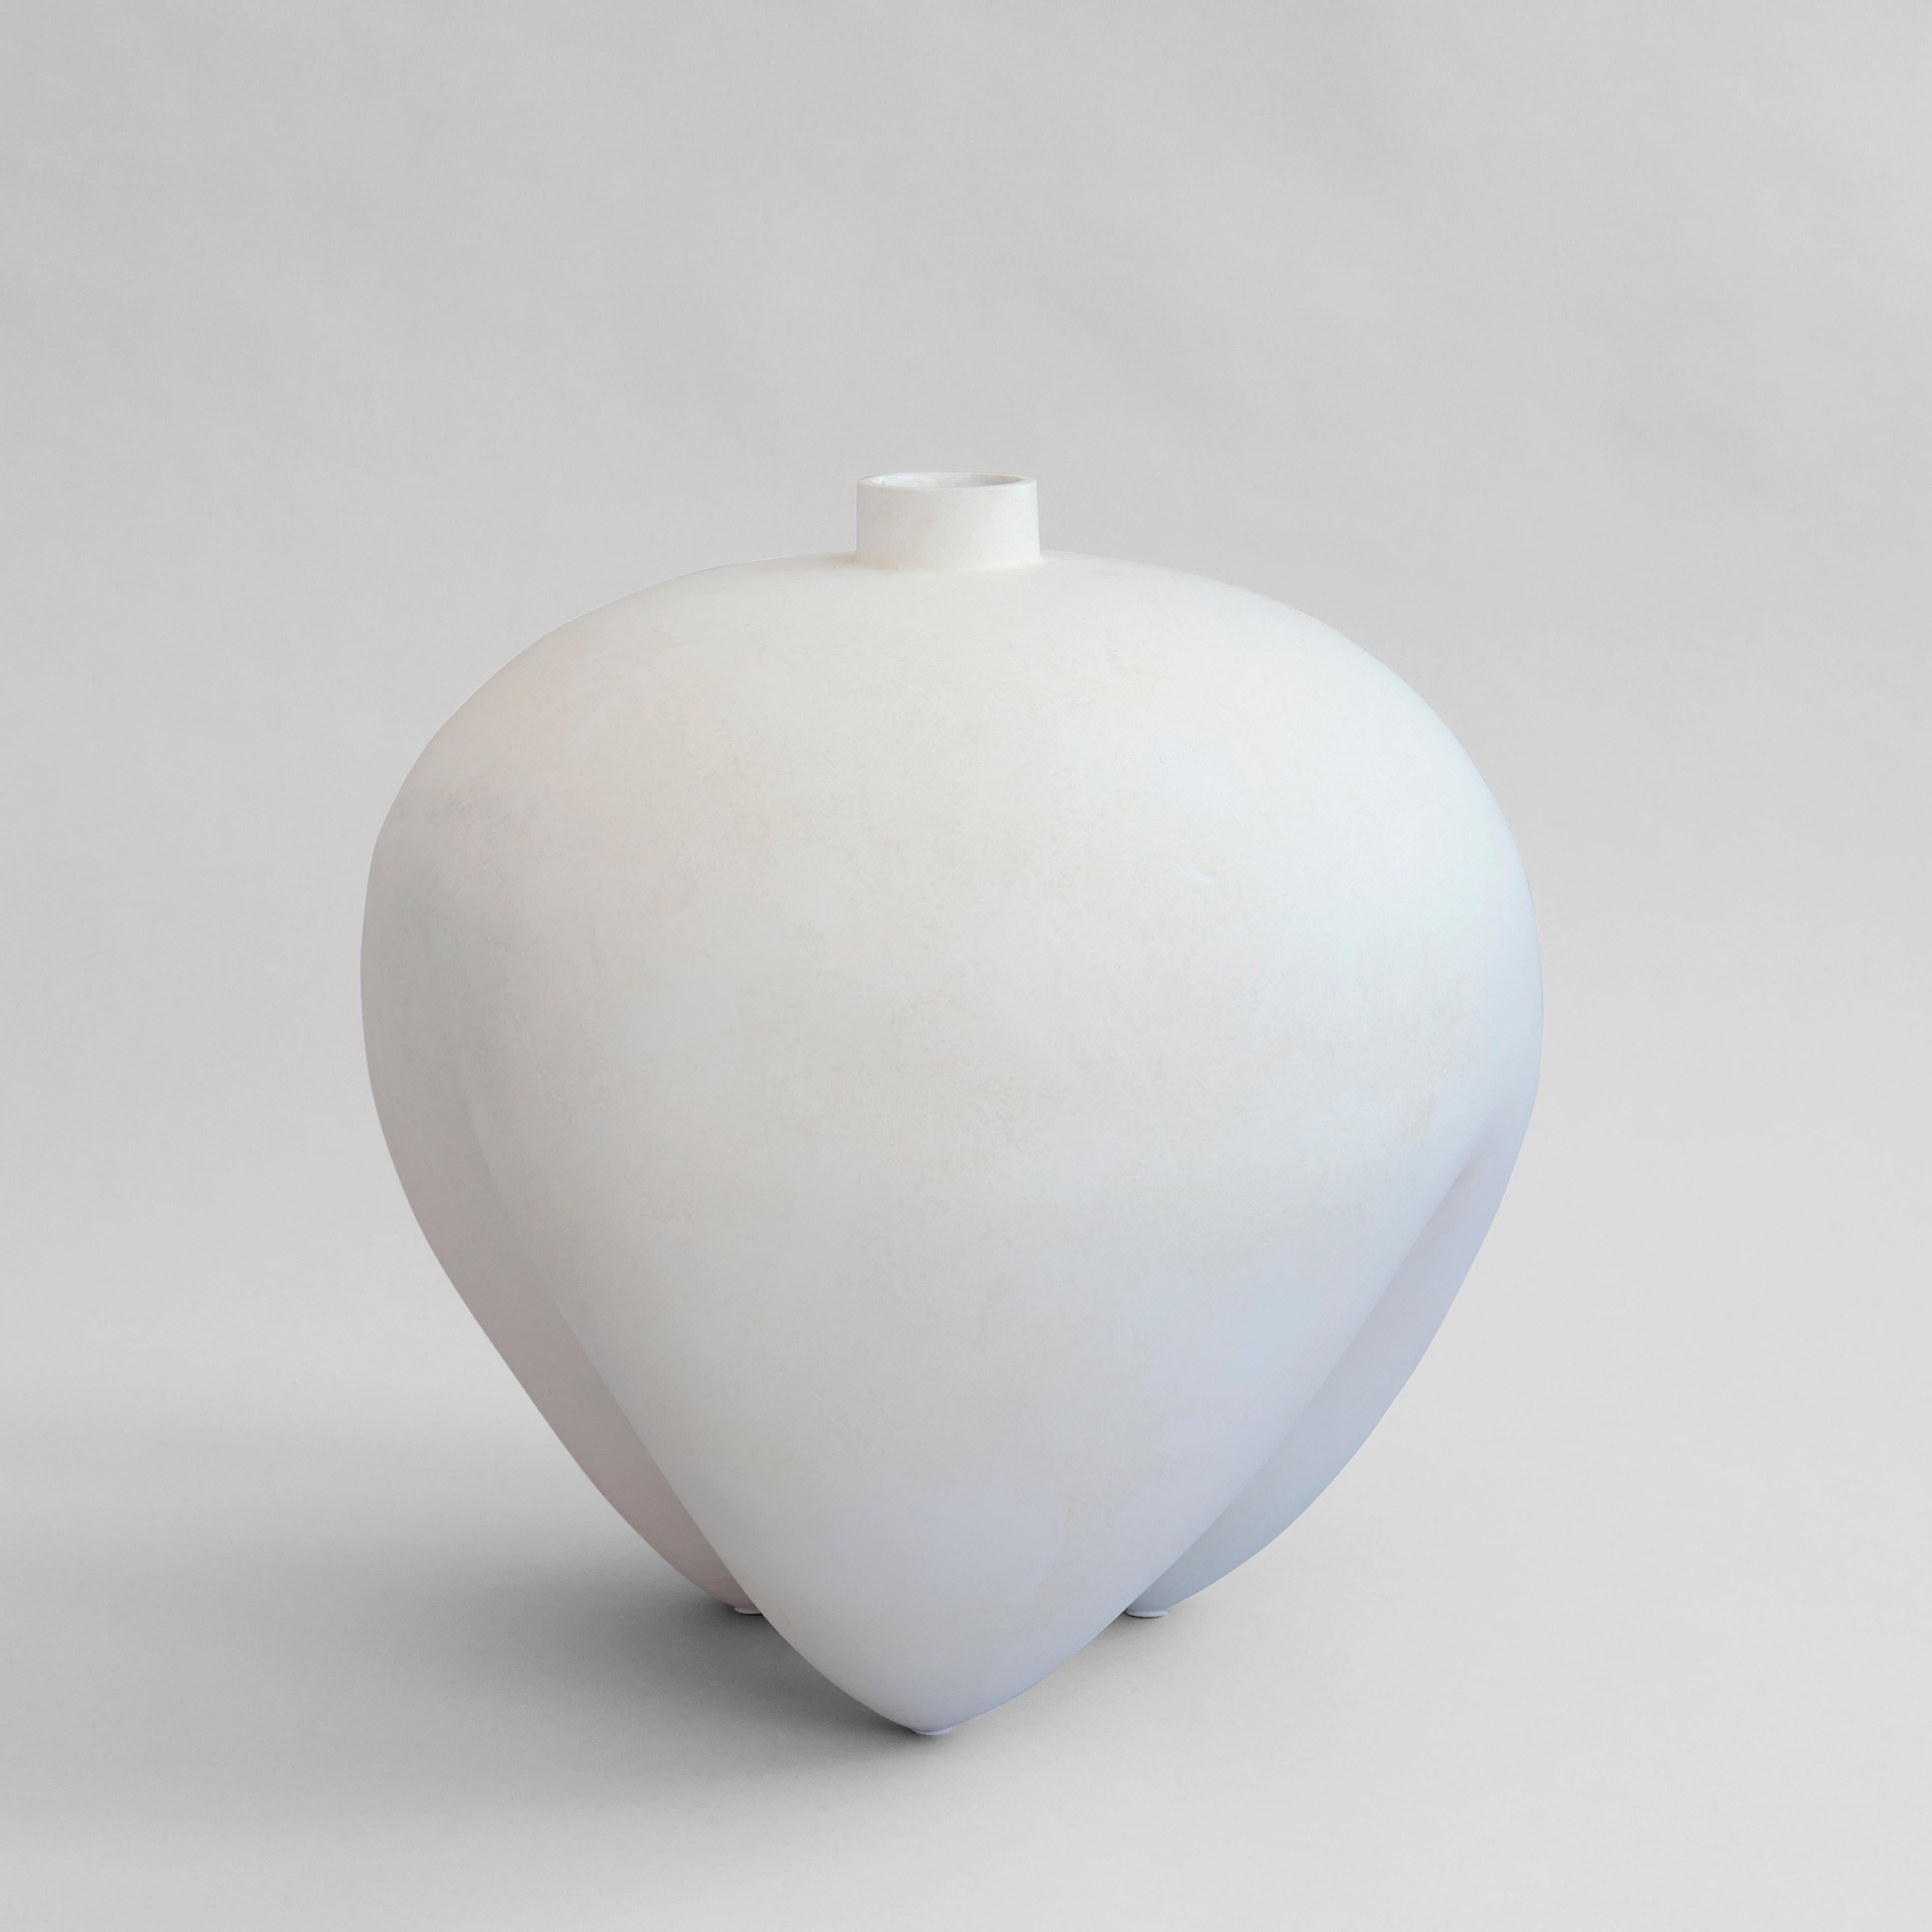 Contemporary Danish design large apple shaped vase in a matte white glaze finish.
Tubular spout opening.
     